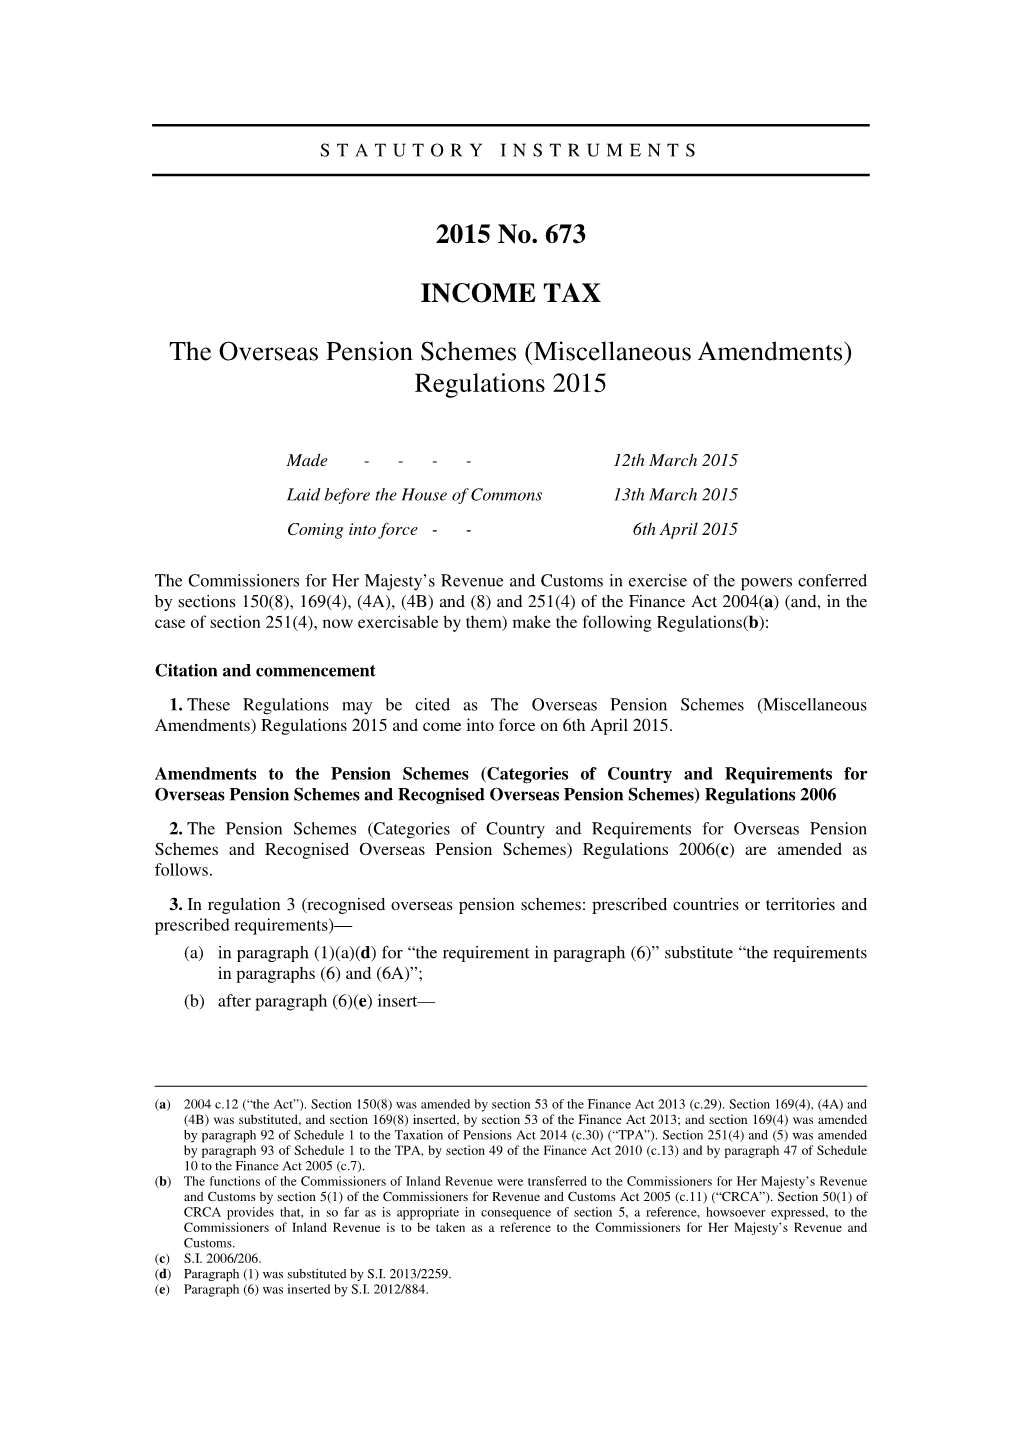 The Overseas Pension Schemes (Miscellaneous Amendments) Regulations 2015